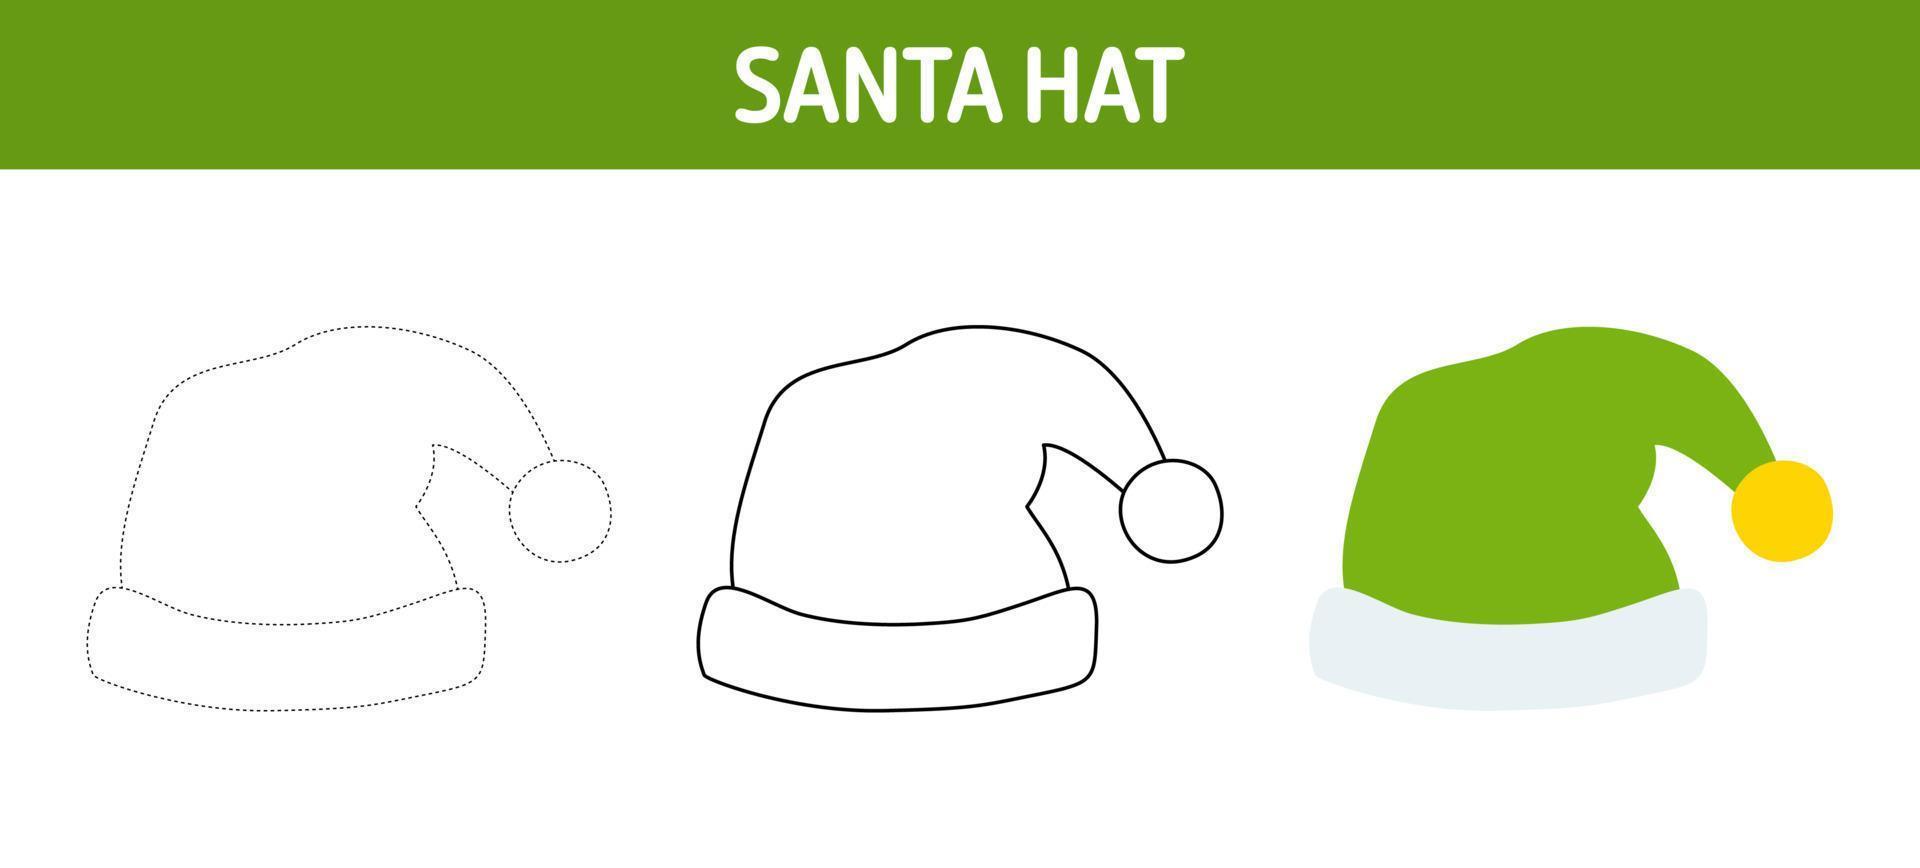 Santa Hat tracing and coloring worksheet for kids vector